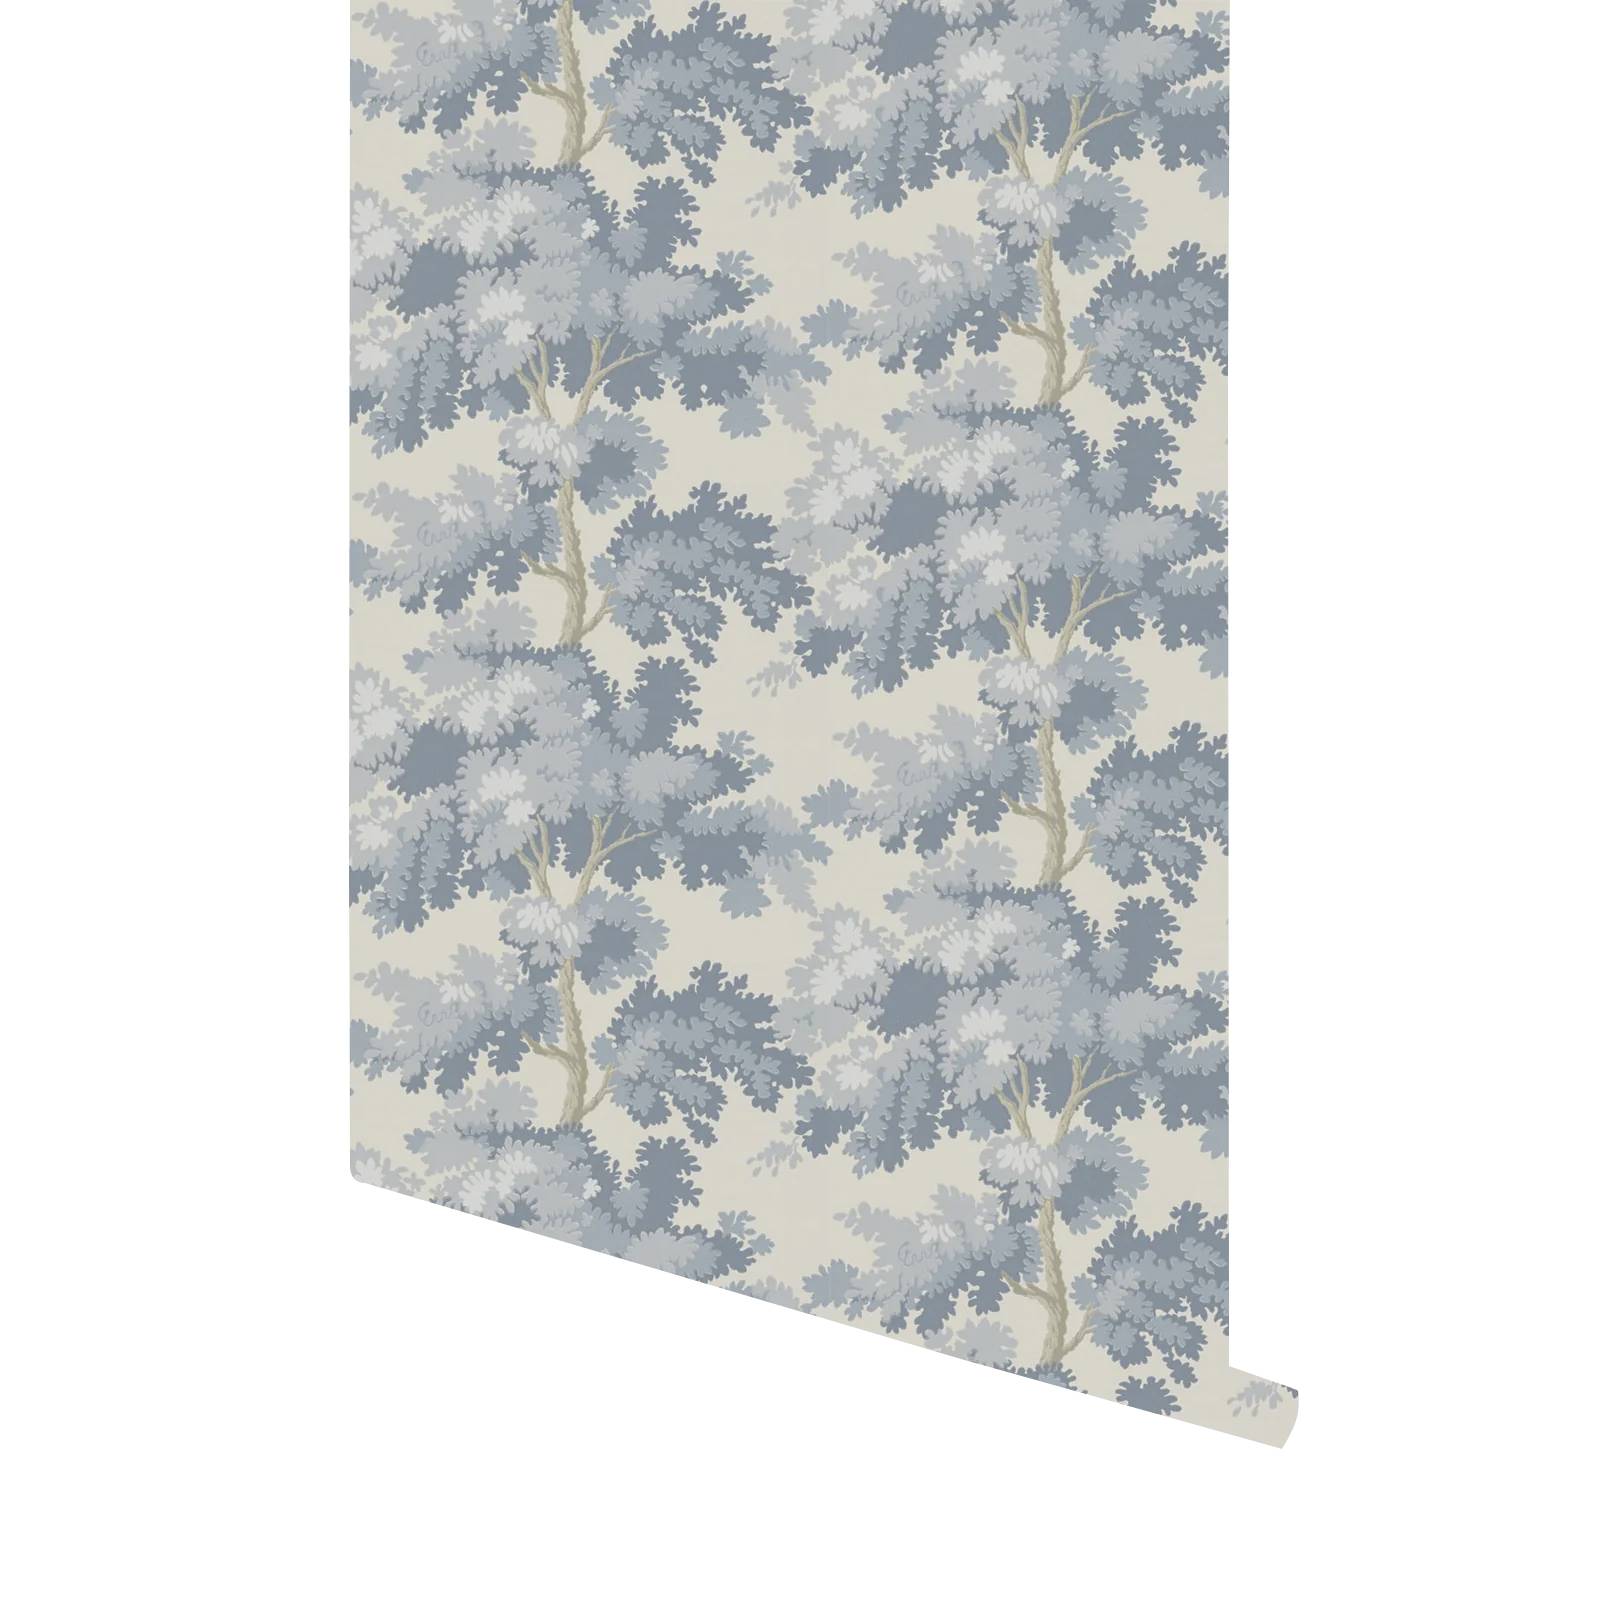 Romantic-Forest-Wallpaper-Roll-in-Light-Blue_1600x1600_jpg.jpg